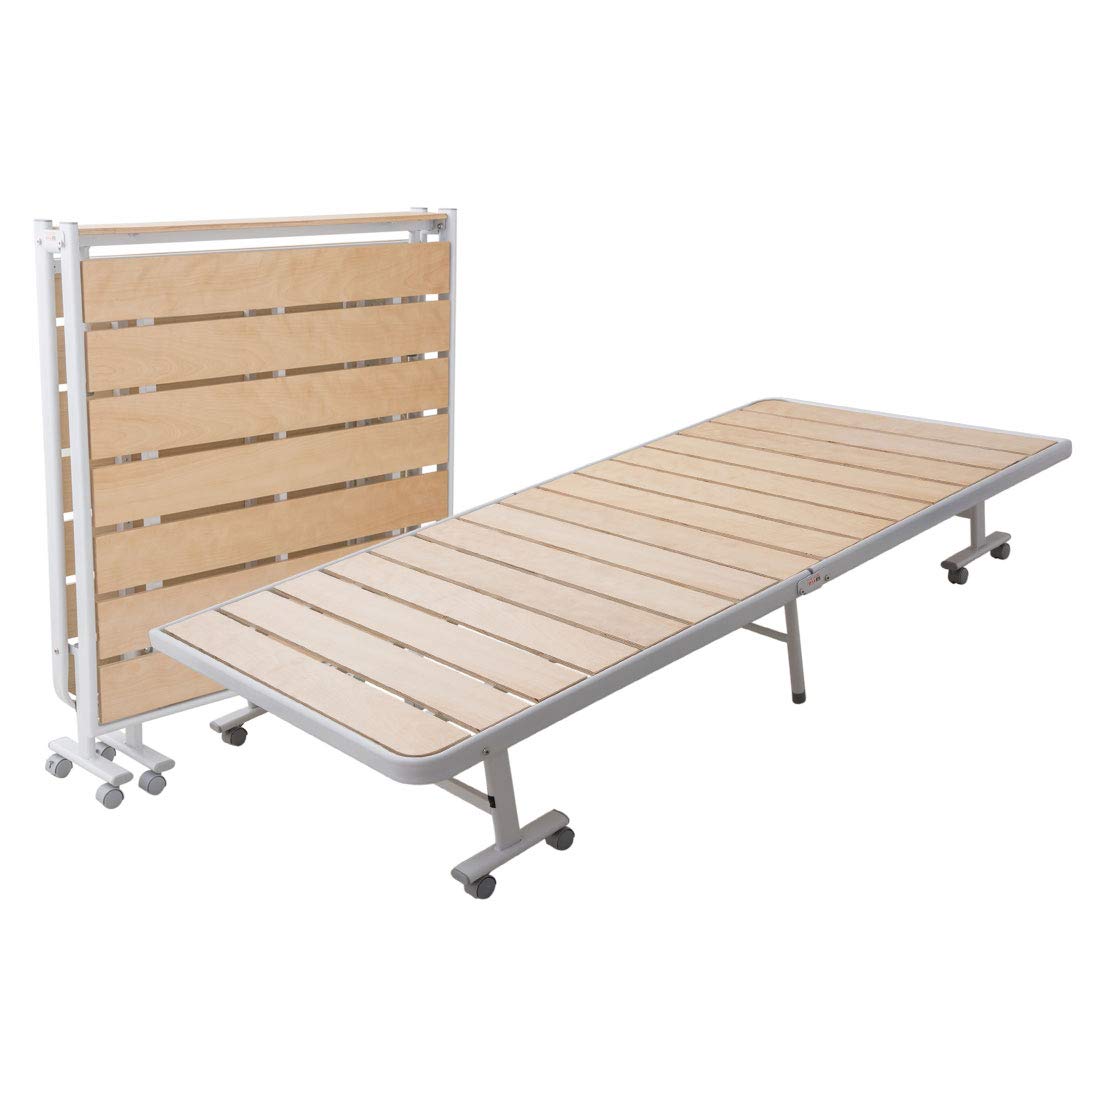 EMOOR Wood Slatted Folding Rollaway Platform Bed SUNOKO-MEHOL Twin (39x79in) for Japanese Futon Mattress (Ash) Foldable Sleeping